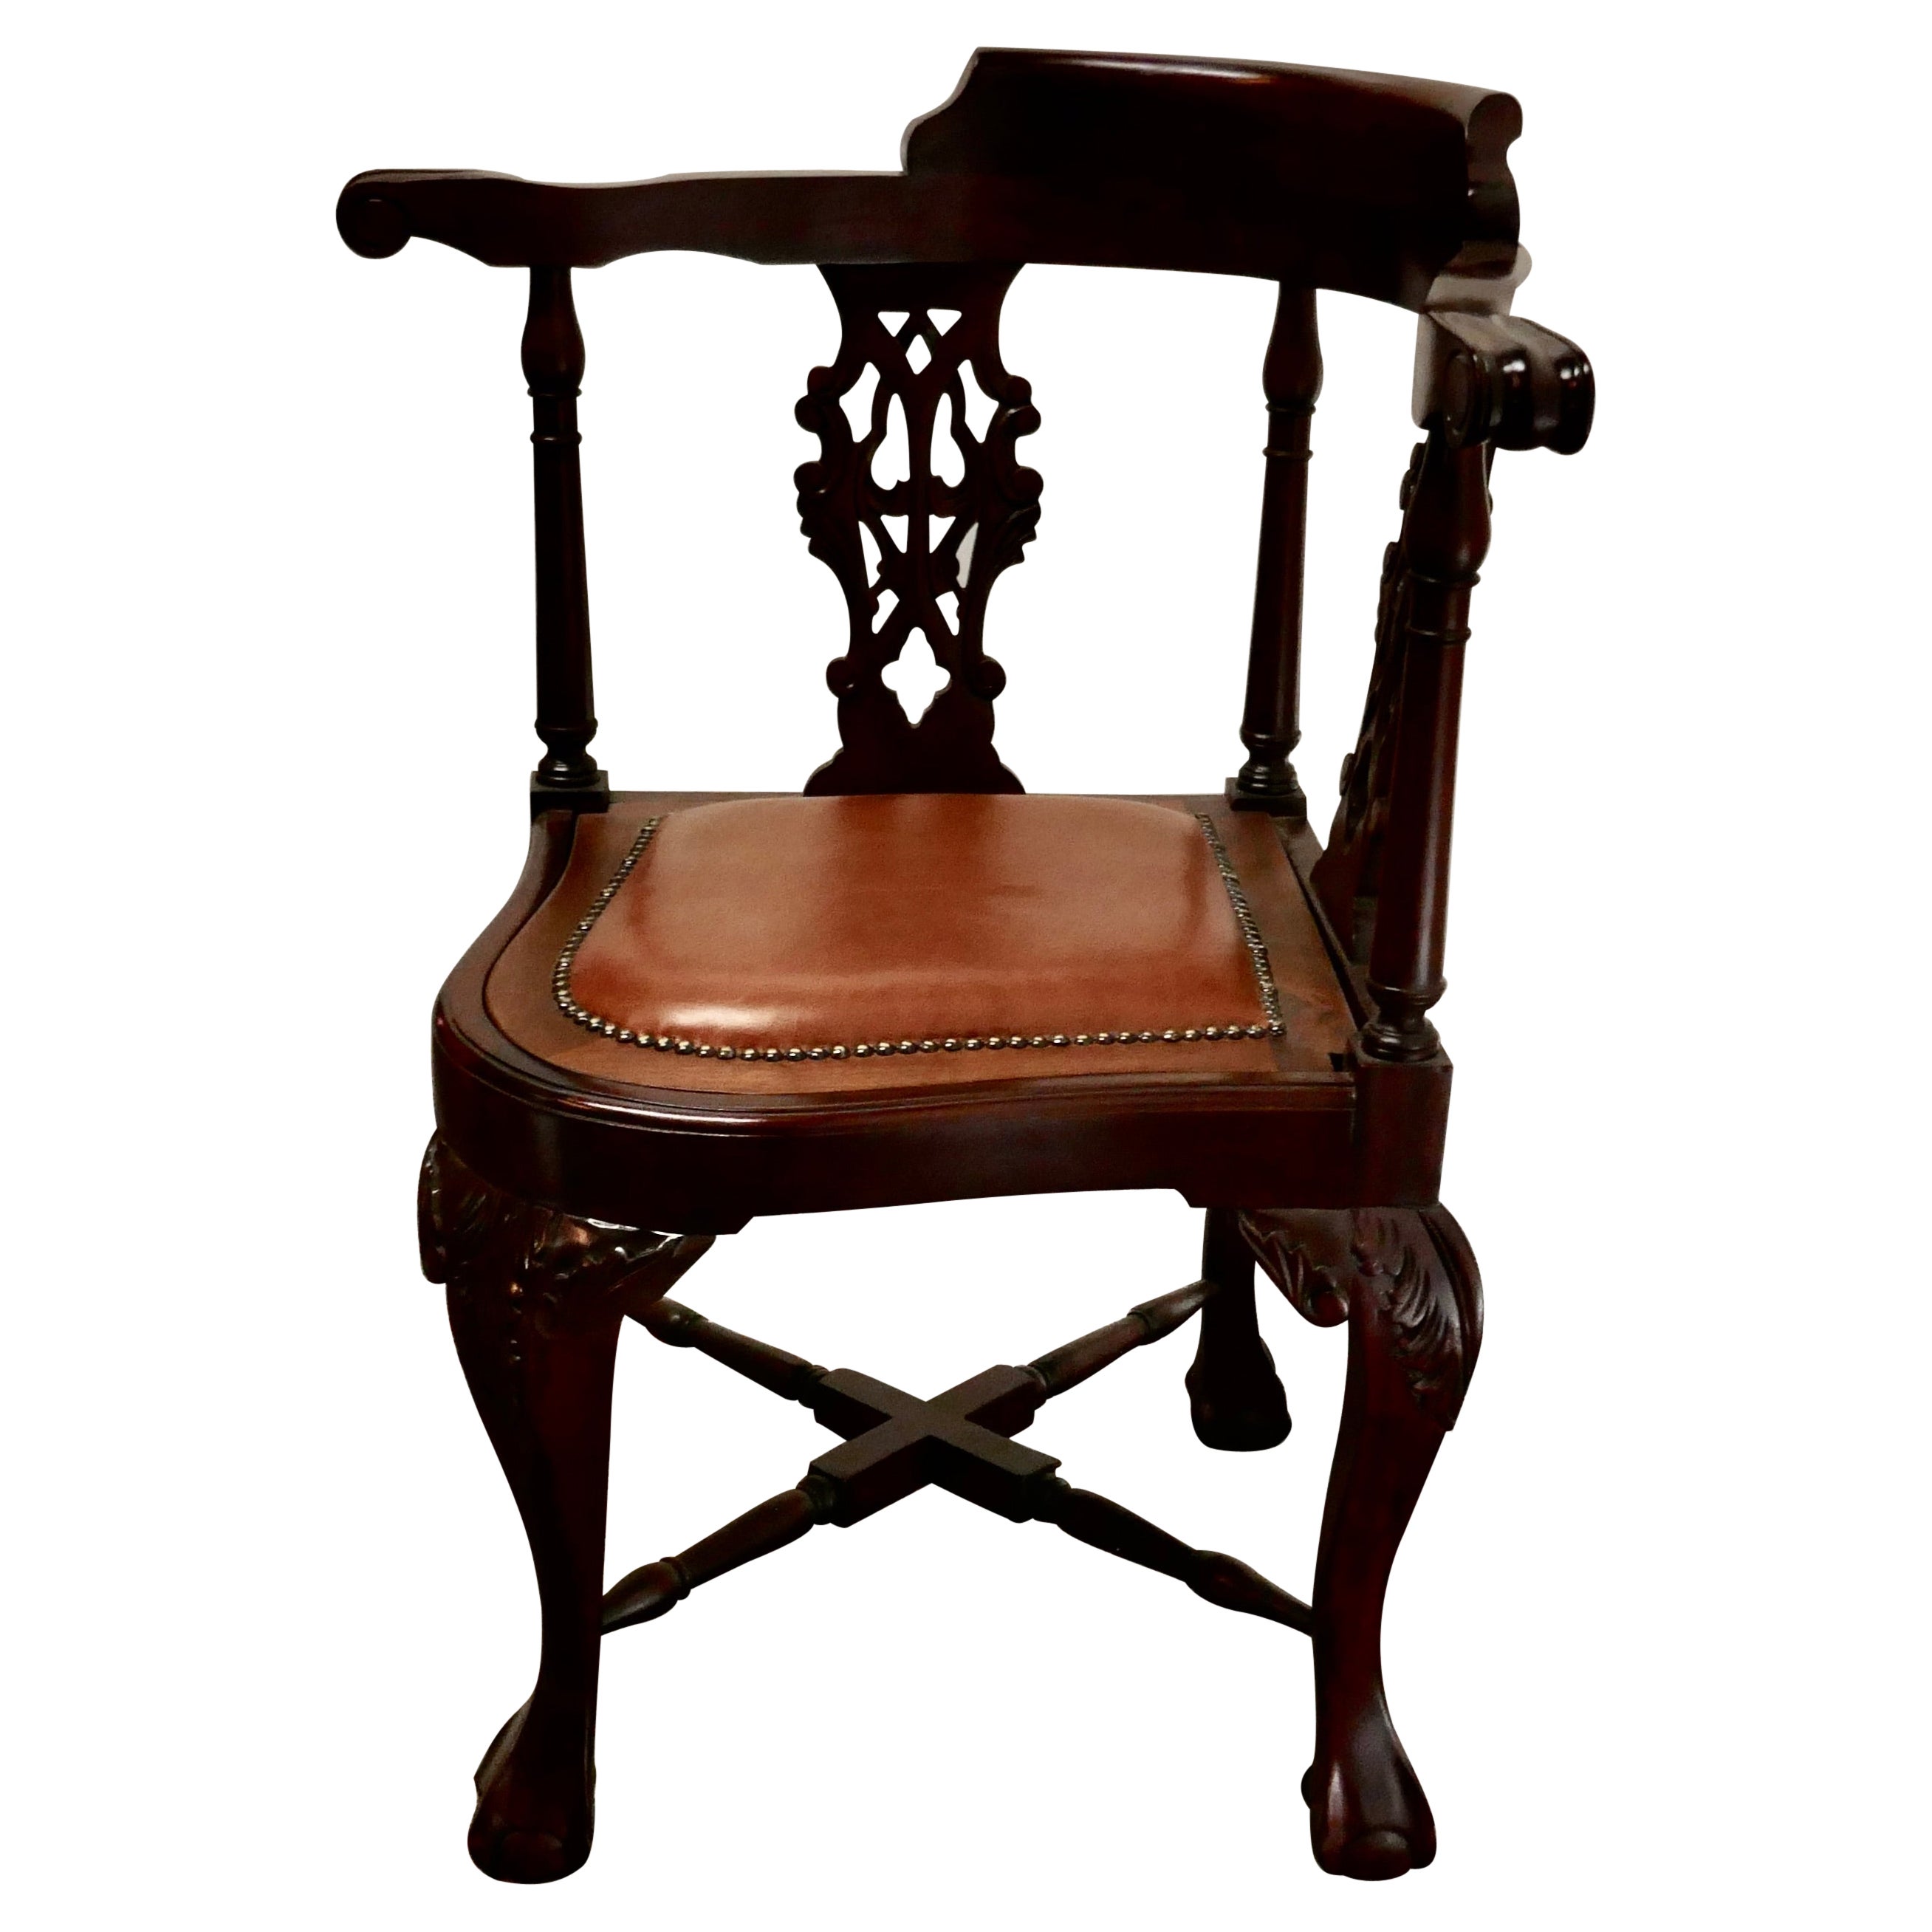 Chunky Georgian Style Mahogany Corner Arm Chair (fauteuil d'angle en acajou de style géorgien)